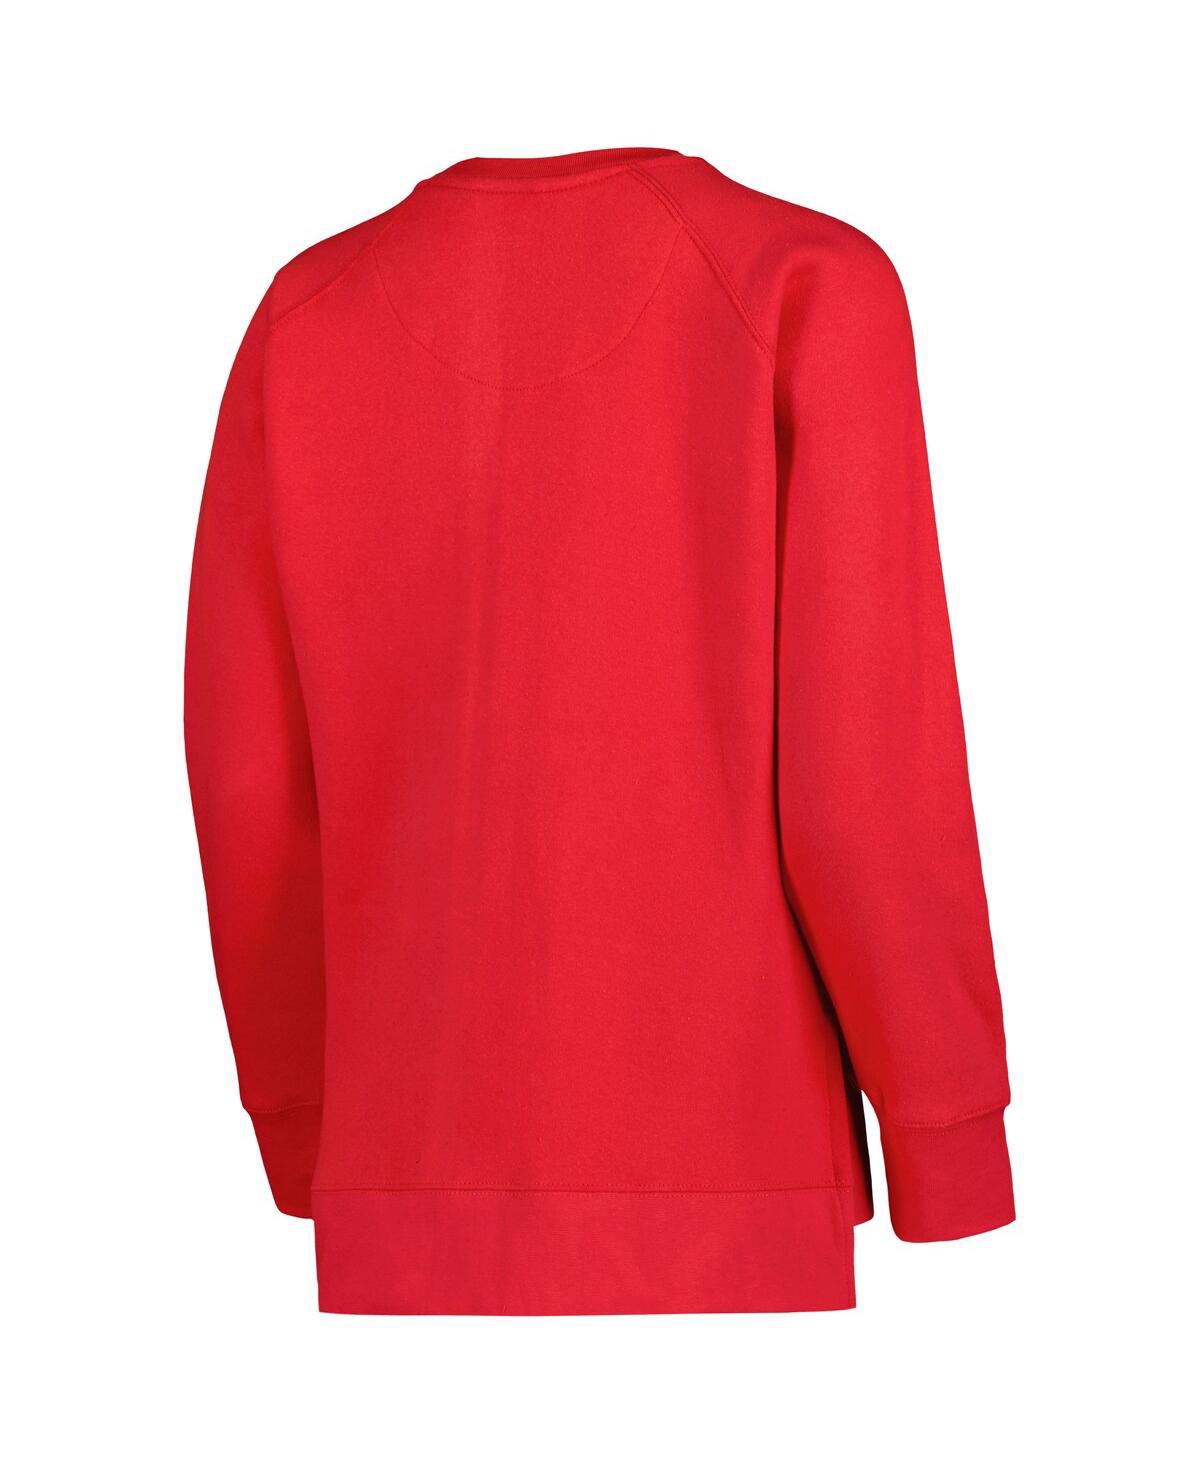 Shop Pressbox Women's  Red Wisconsin Badgers Steamboat Animal Print Raglan Pullover Sweatshirt